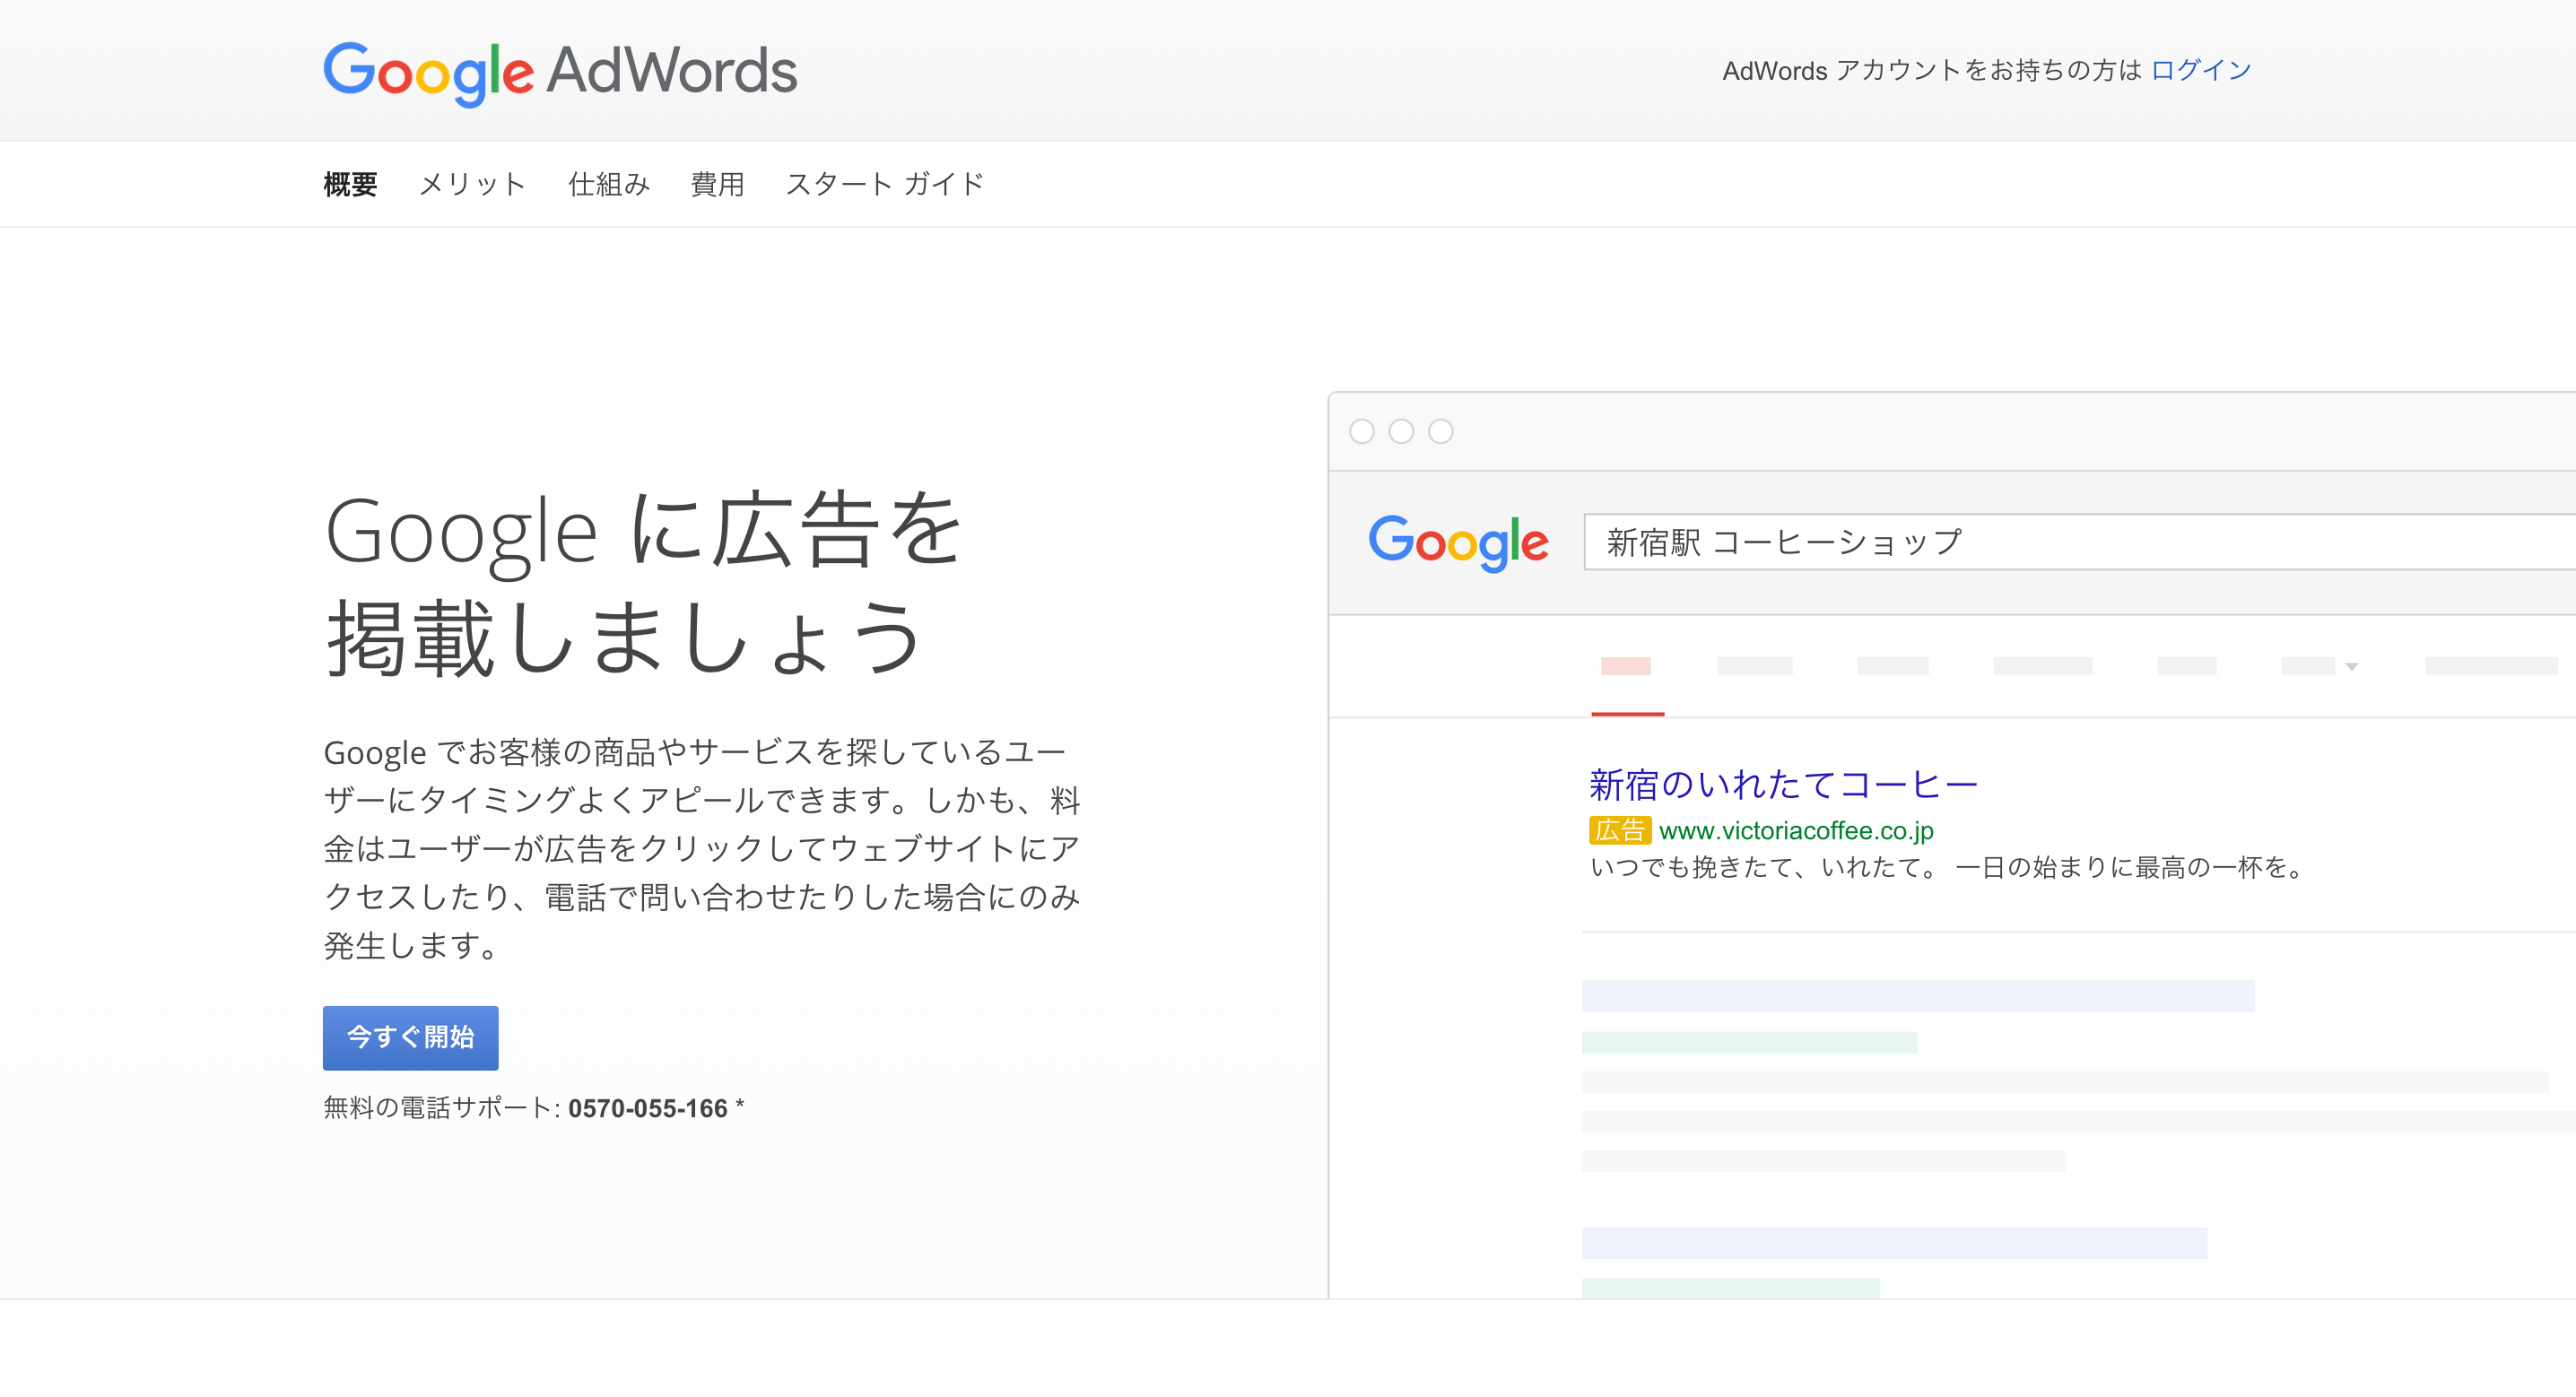 FireShot Capture - Google AdWords（アドワーズ）PPC型のインターネット広告 - https___www.google.co.jp_adwords_